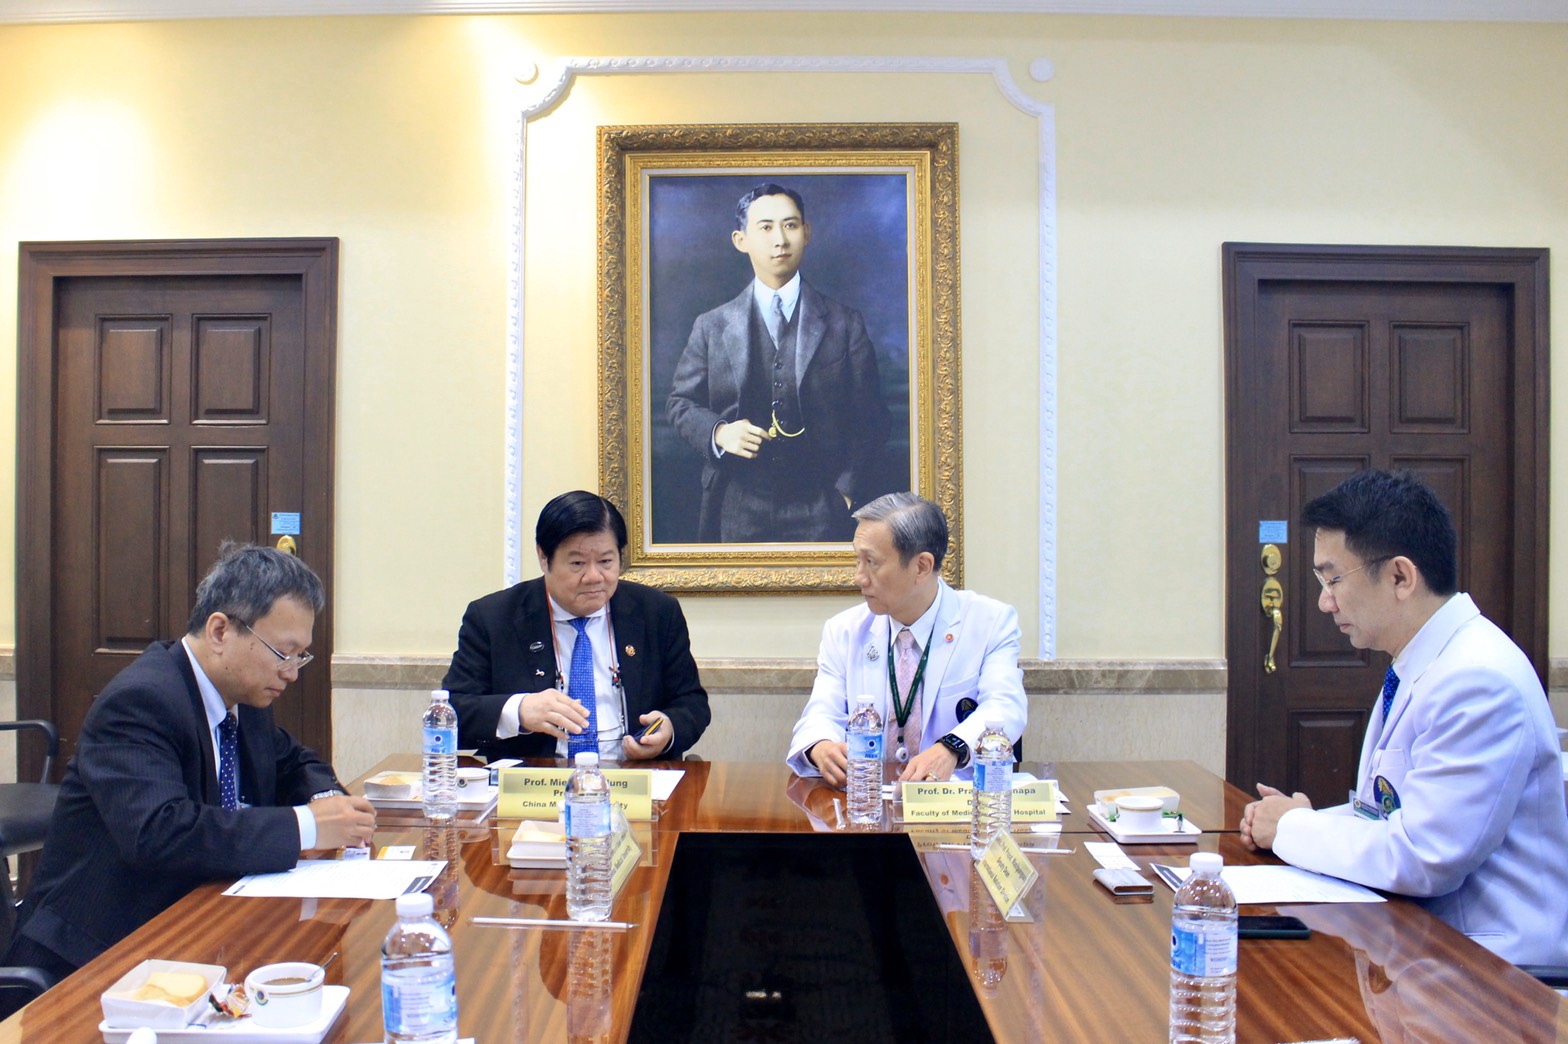 President of Chinal Medical University Taiwan Visits Siriraj